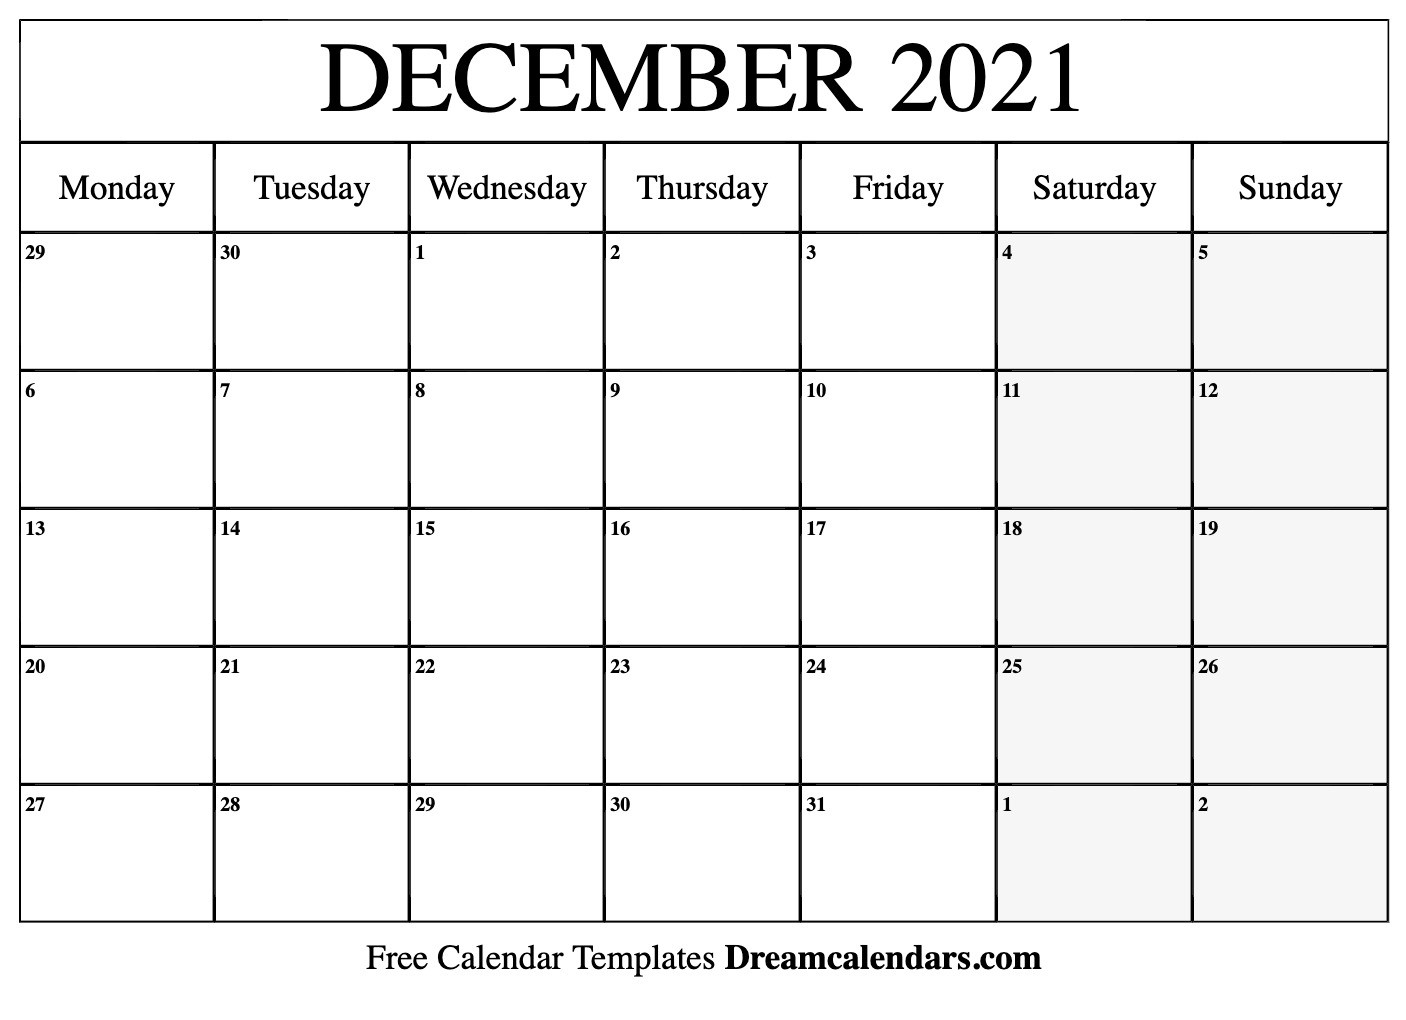 December 2021 Calendar | Free Blank Printable Templates-Free Editable Calendar 2021